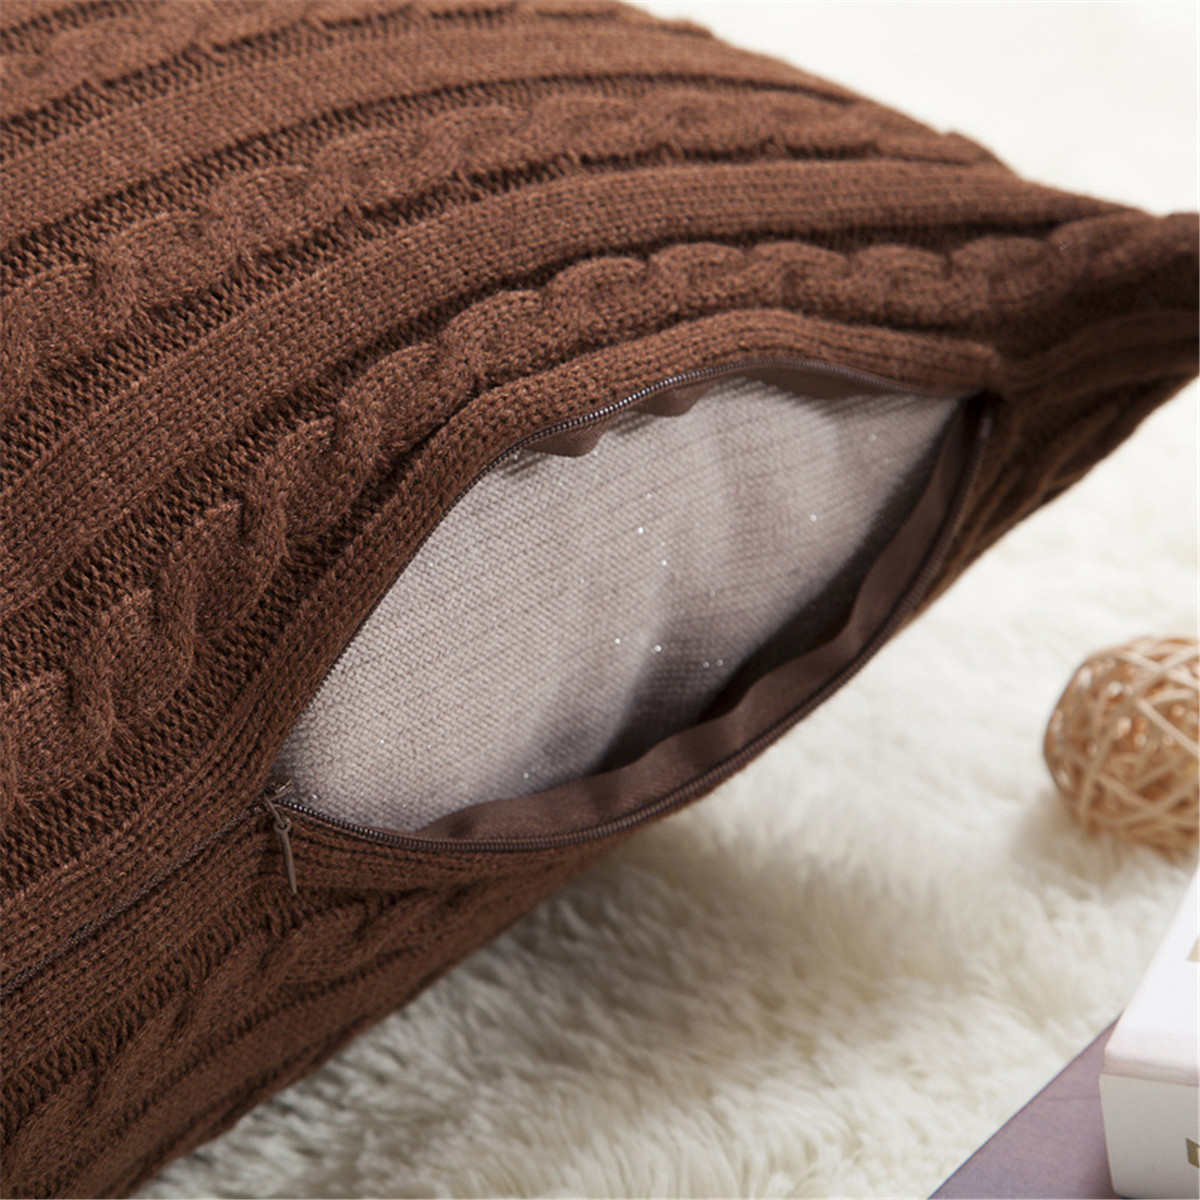 Knit-Fiber-Pillows-Throw-Pillow-Case-Sofa-Waist-Cushion-Cover-Home-Decorative-1641023-6